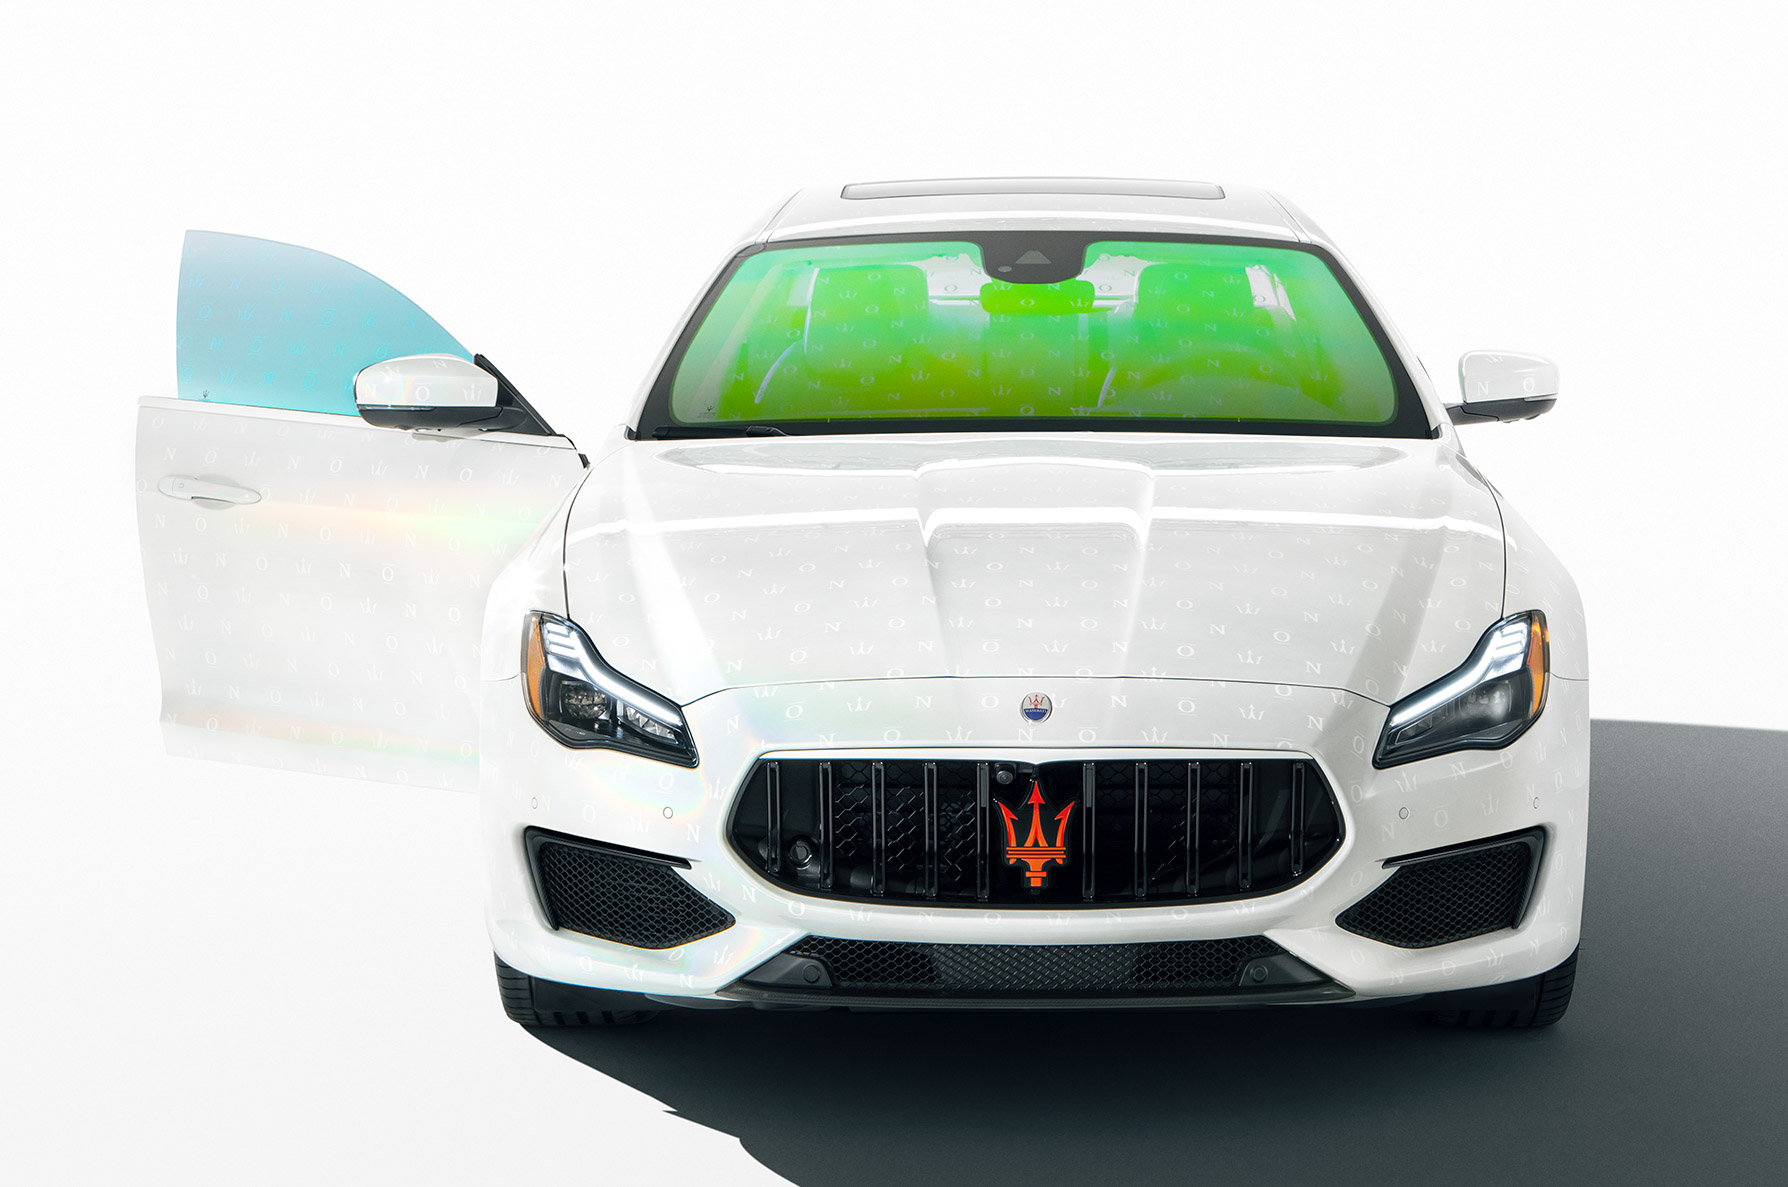 https://s3.paultan.org/image/2020/09/Maserati-Quattroporte-Fuoriserie-Unica-3.jpg